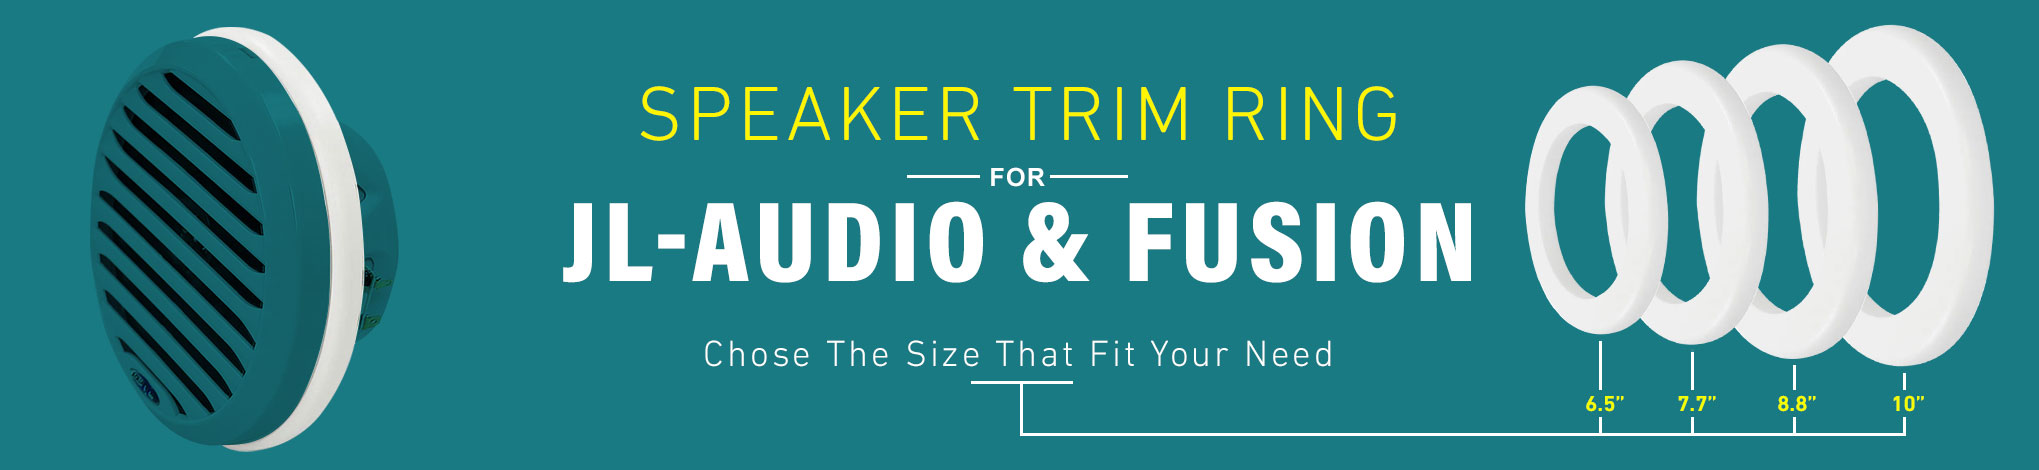 speaker trim ring for jl audio and fusion